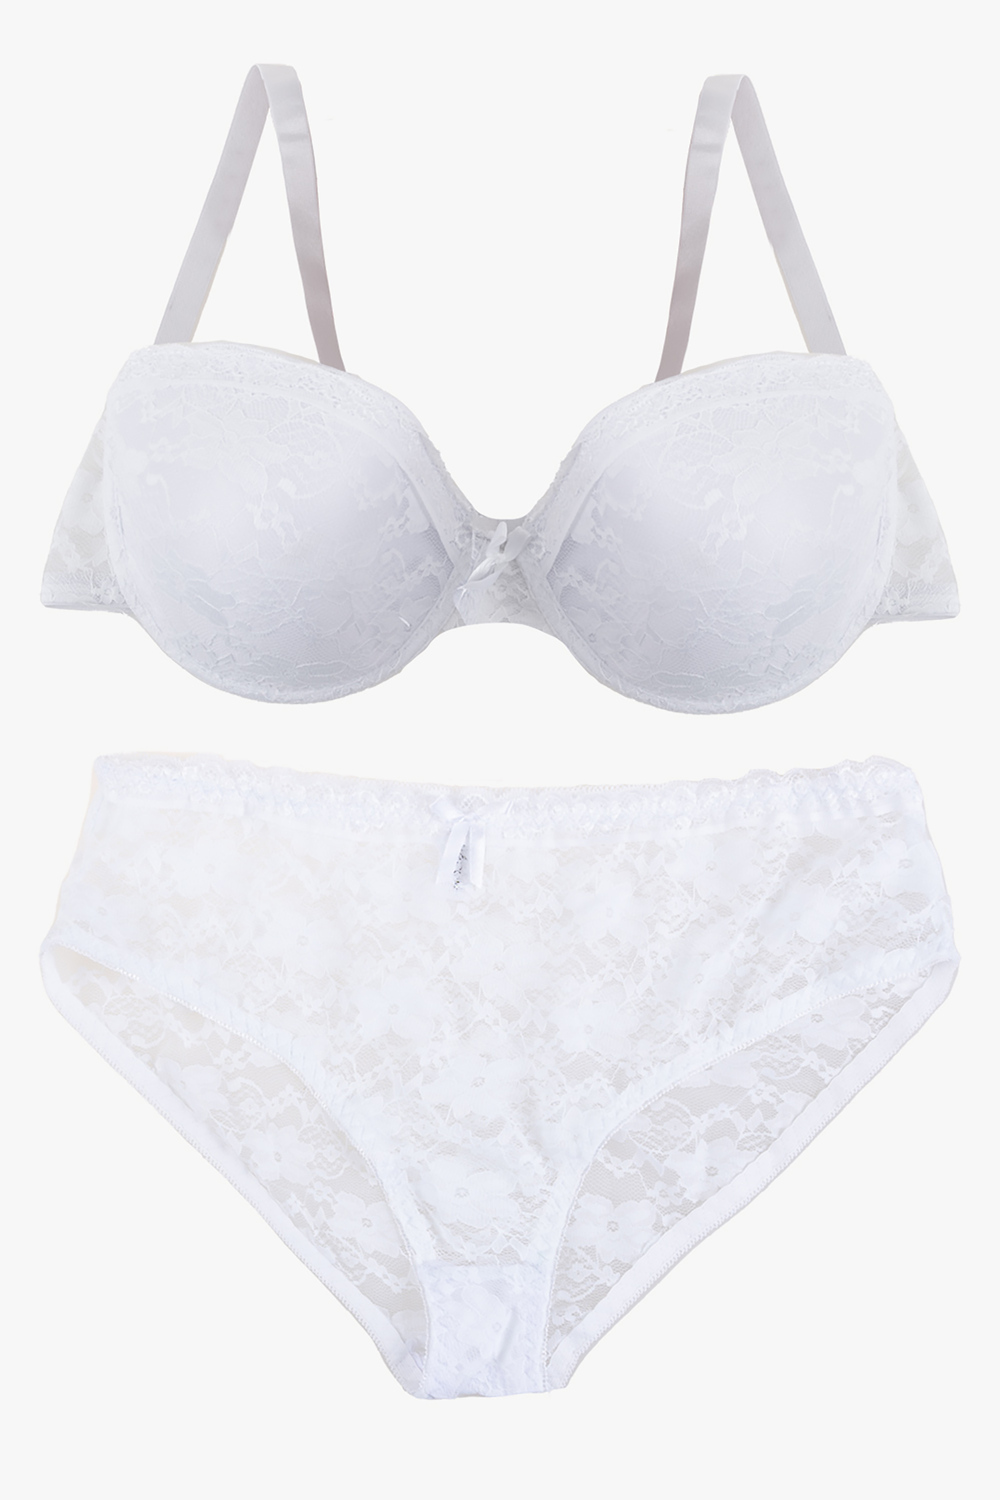 White Lace halter Bra , Victoria Secret size Large